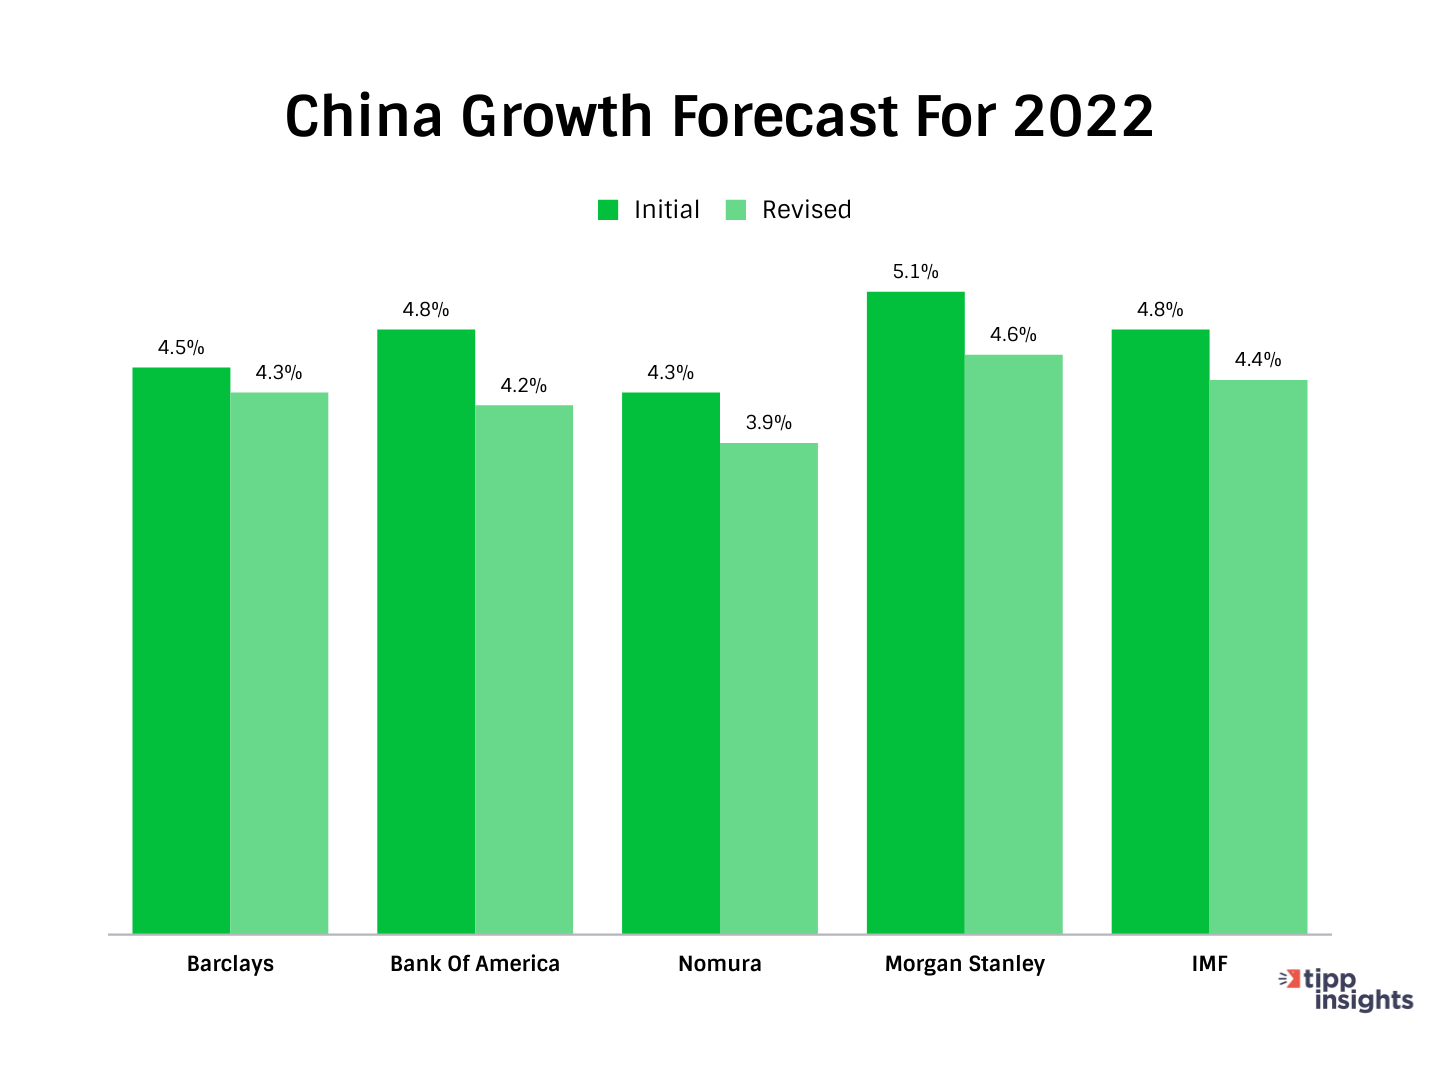 Growth forecast